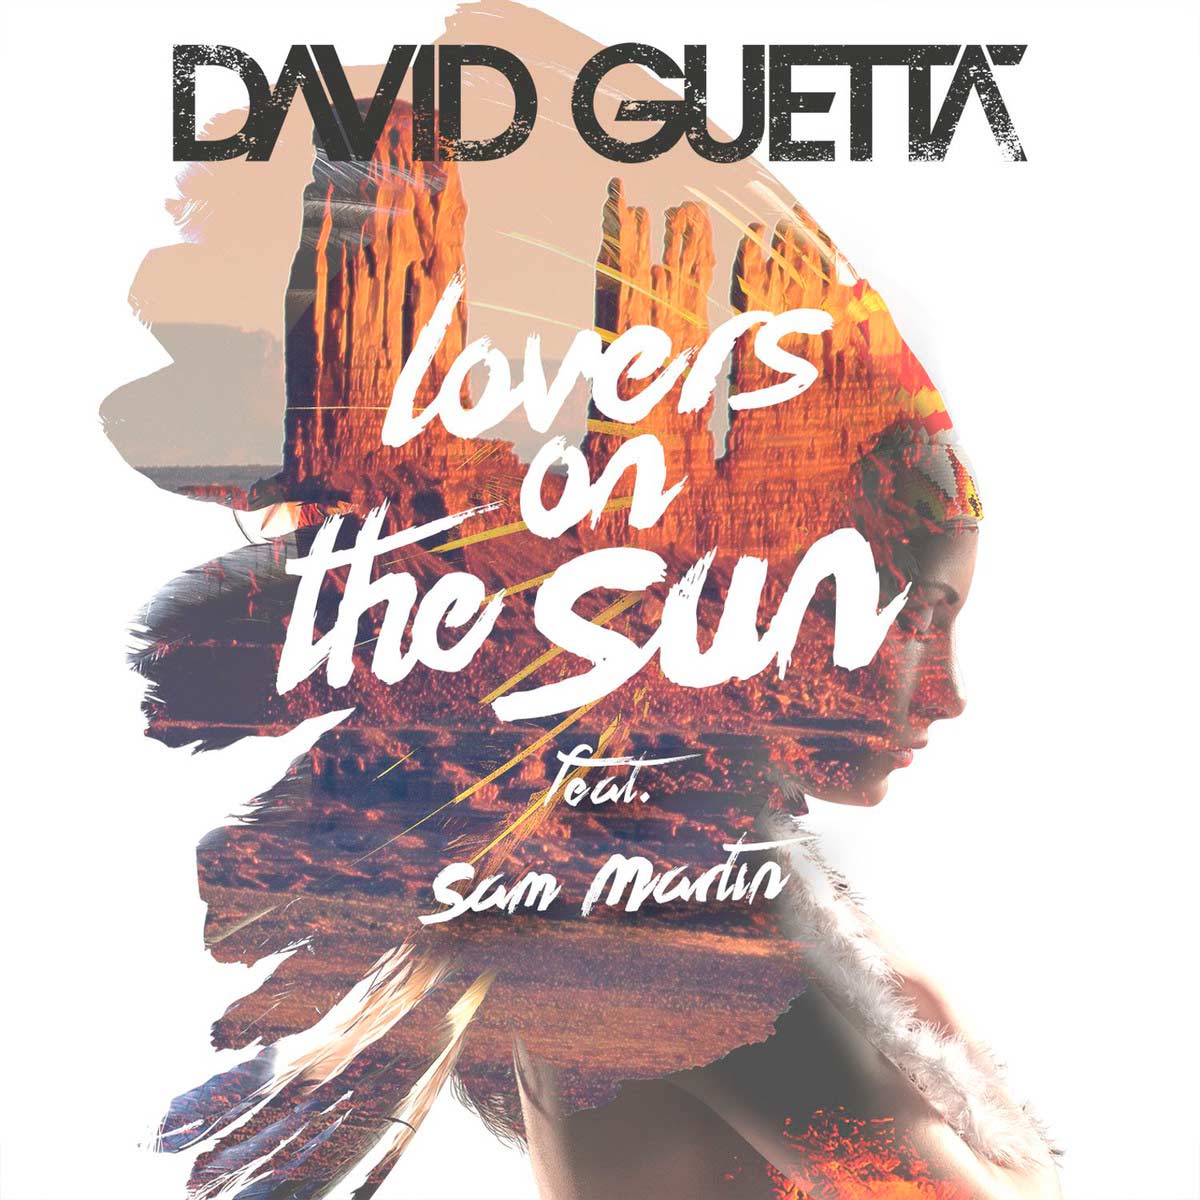 David Guetta con Sam Martin: Lovers on the sun, la portada de la canción